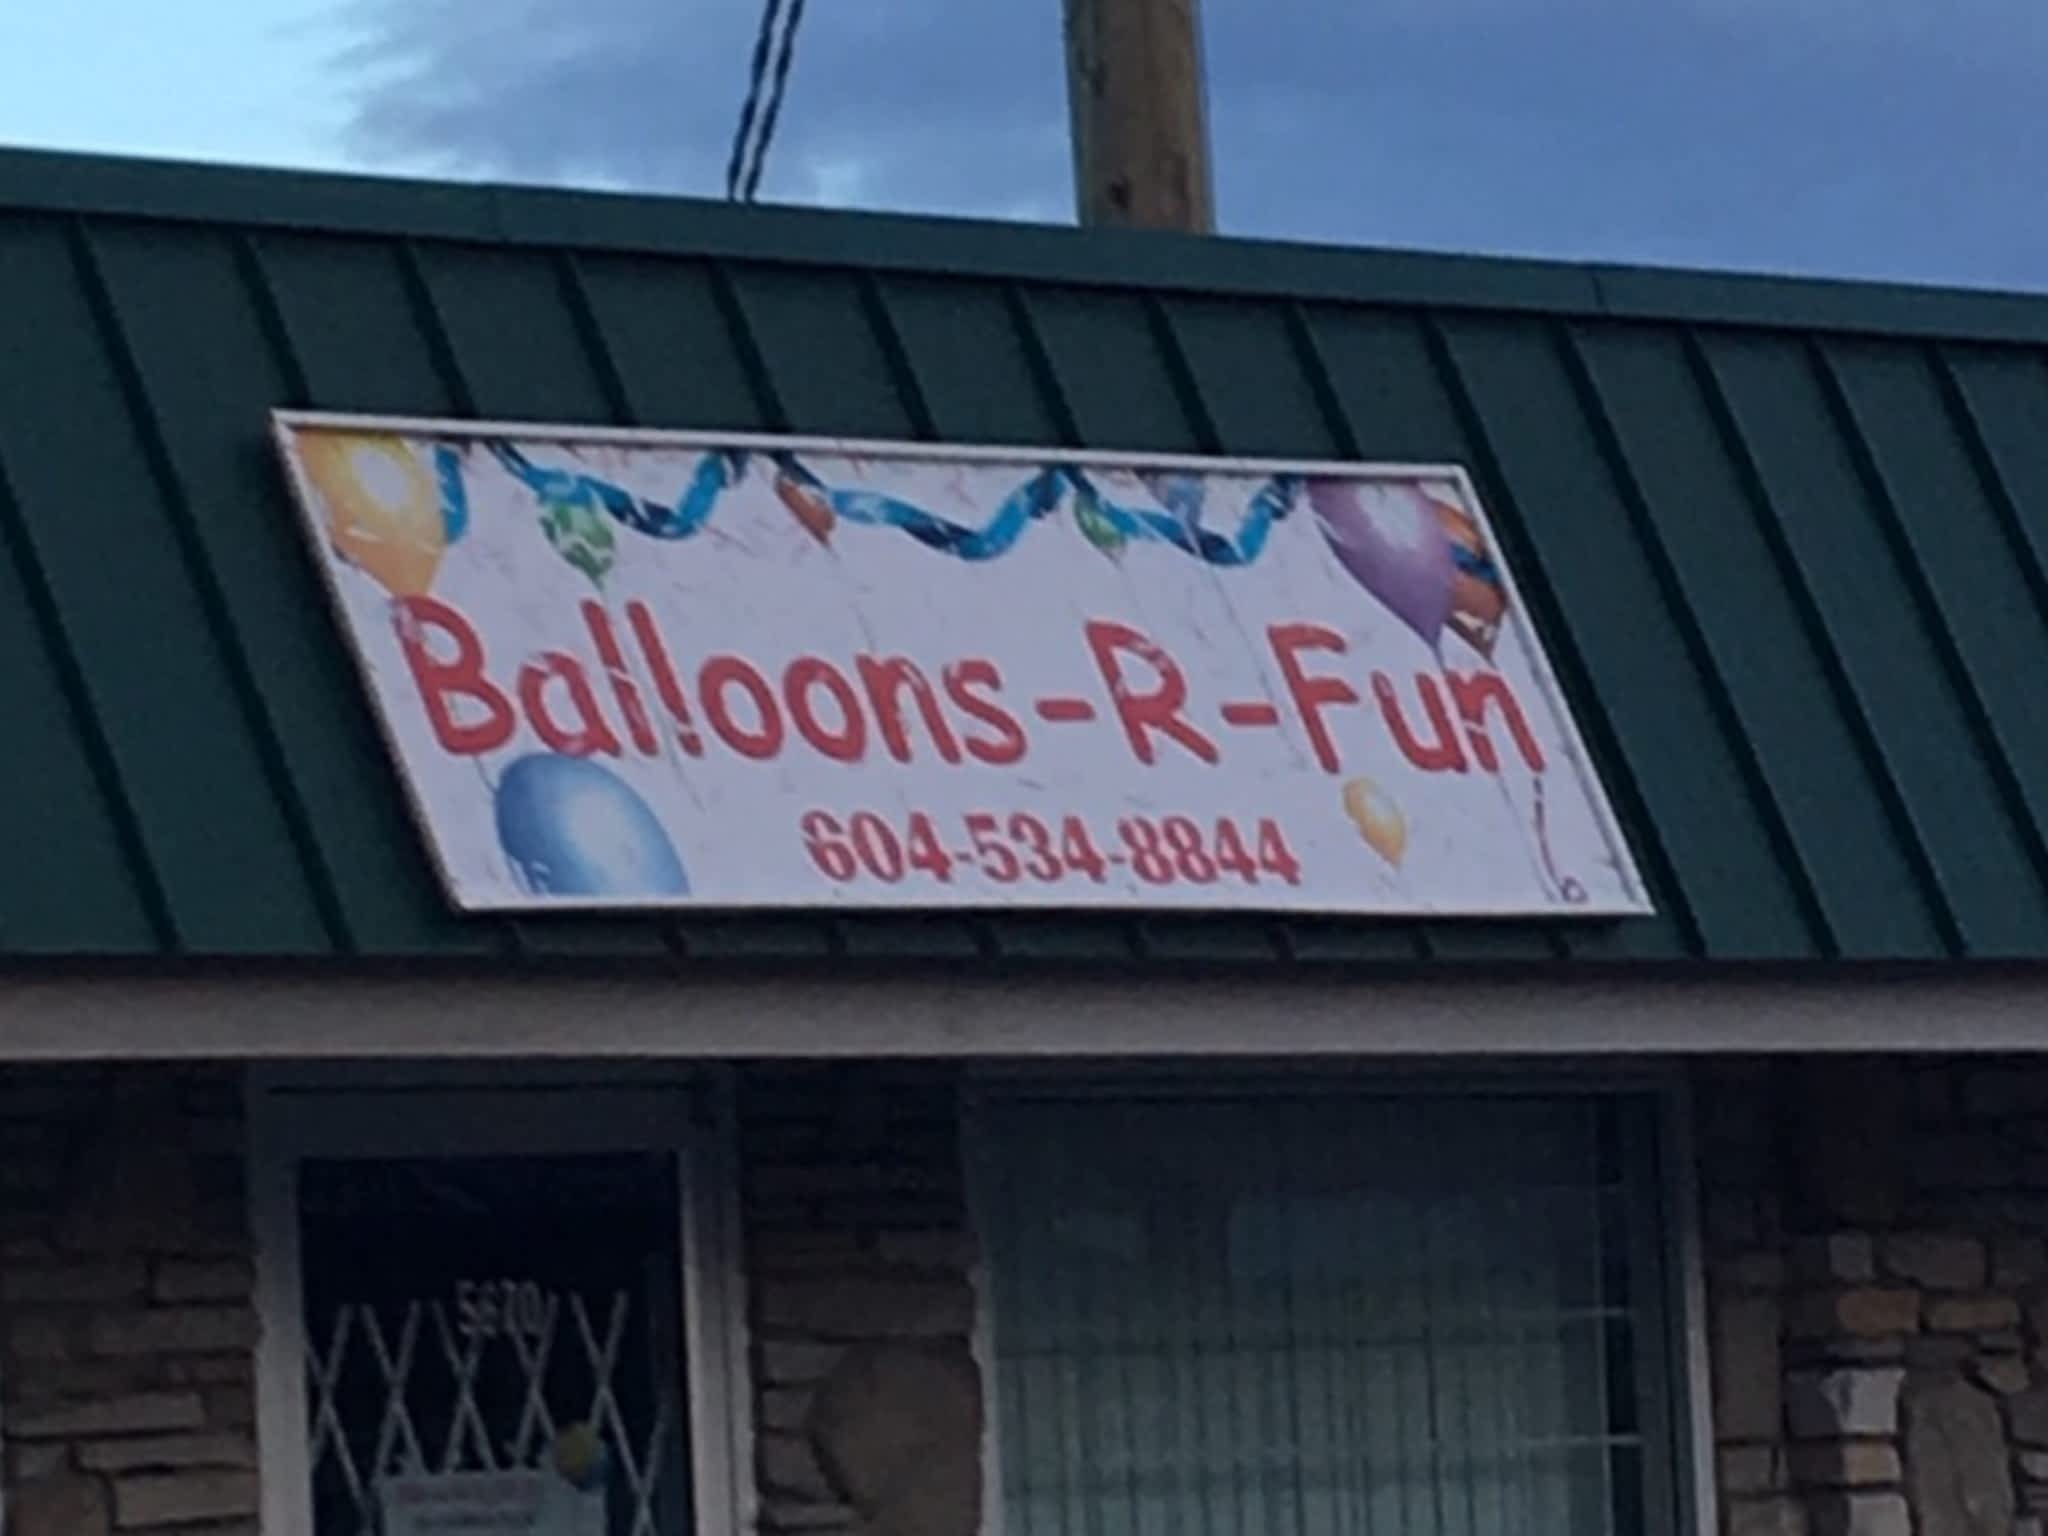 photo Westcoast Balloons-R-Fun Inc